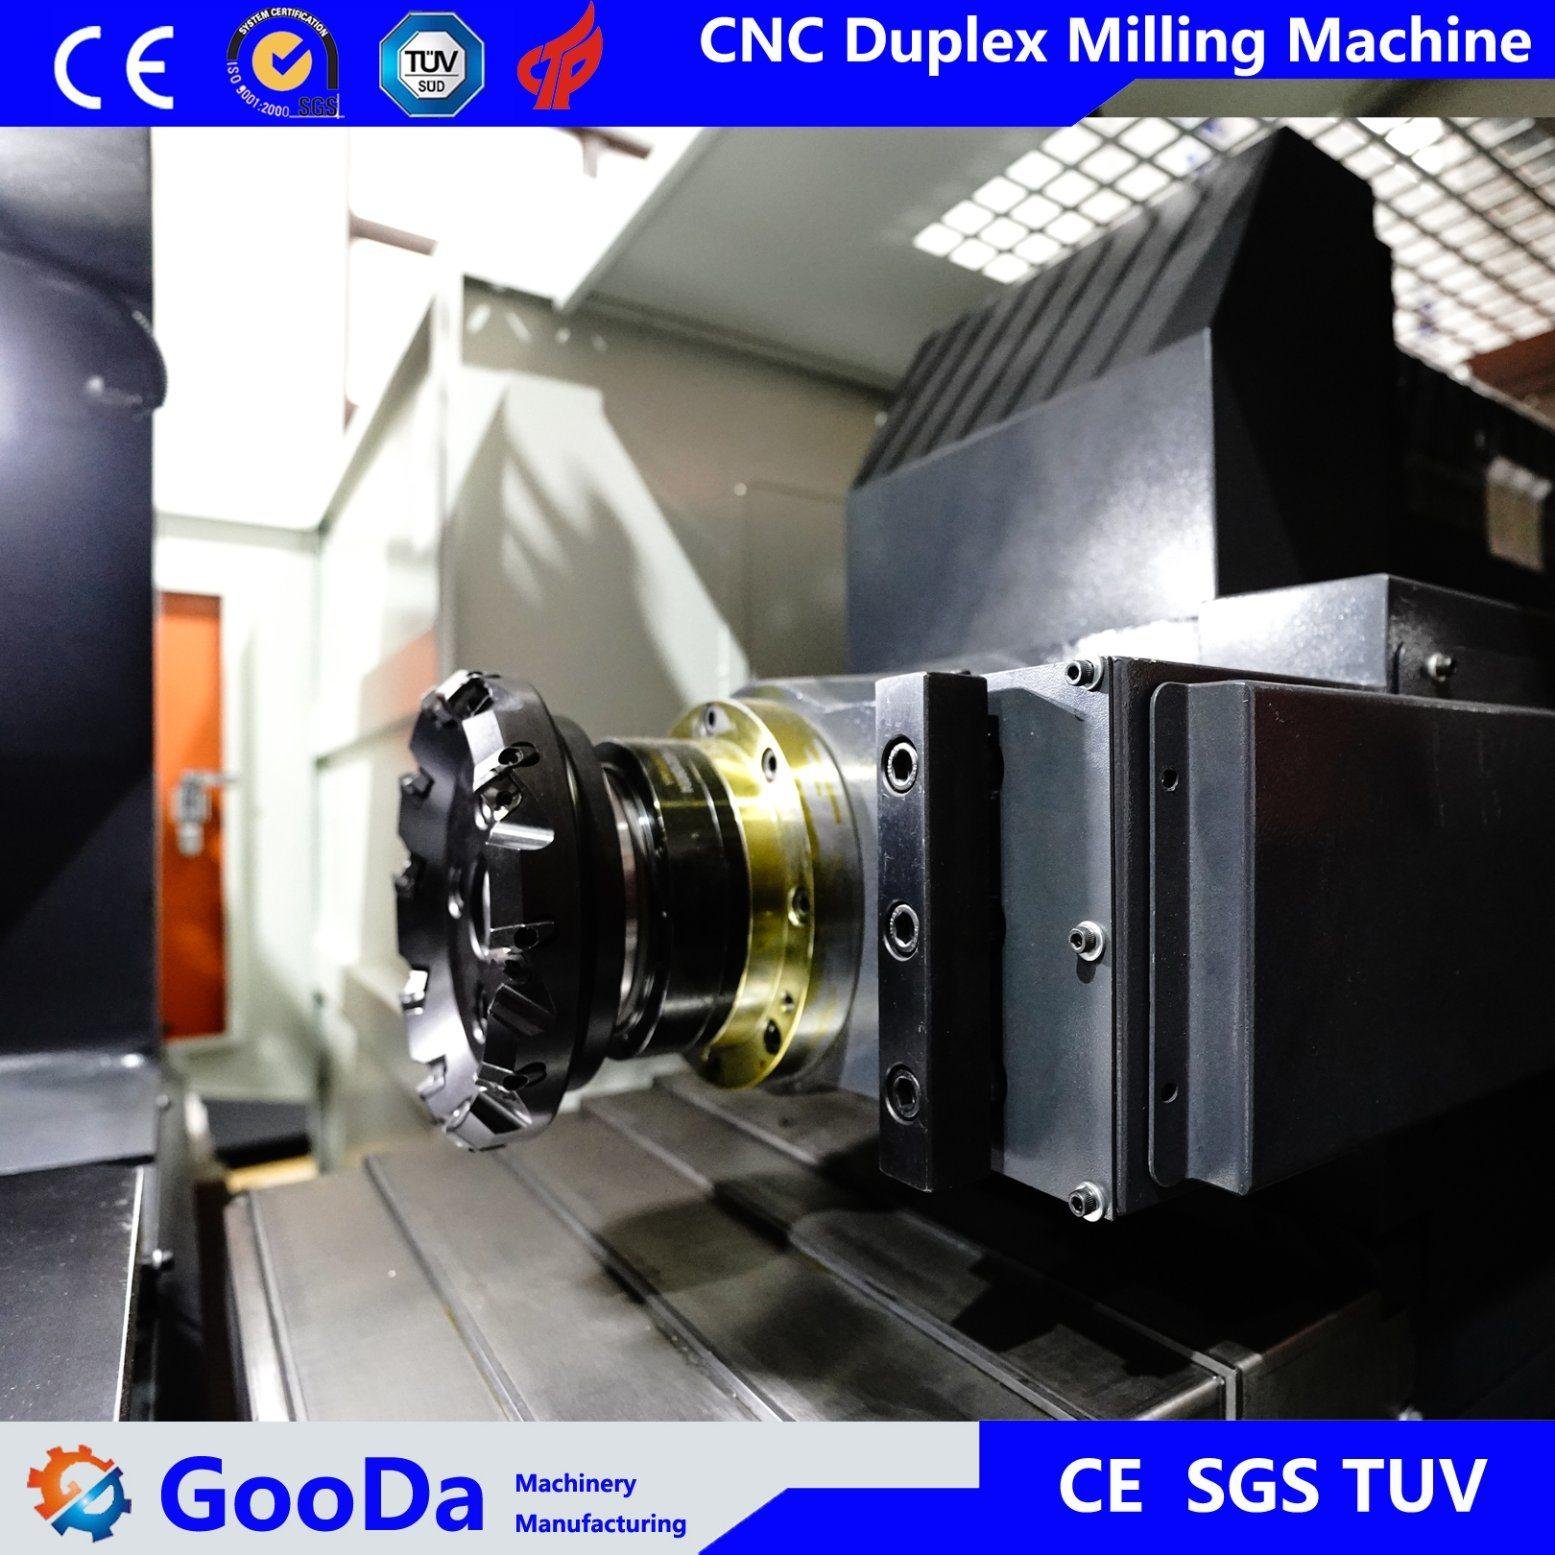 Powerful Twin Head CNC Duplex Milling Machine Precision Full Automatica Cutting  2